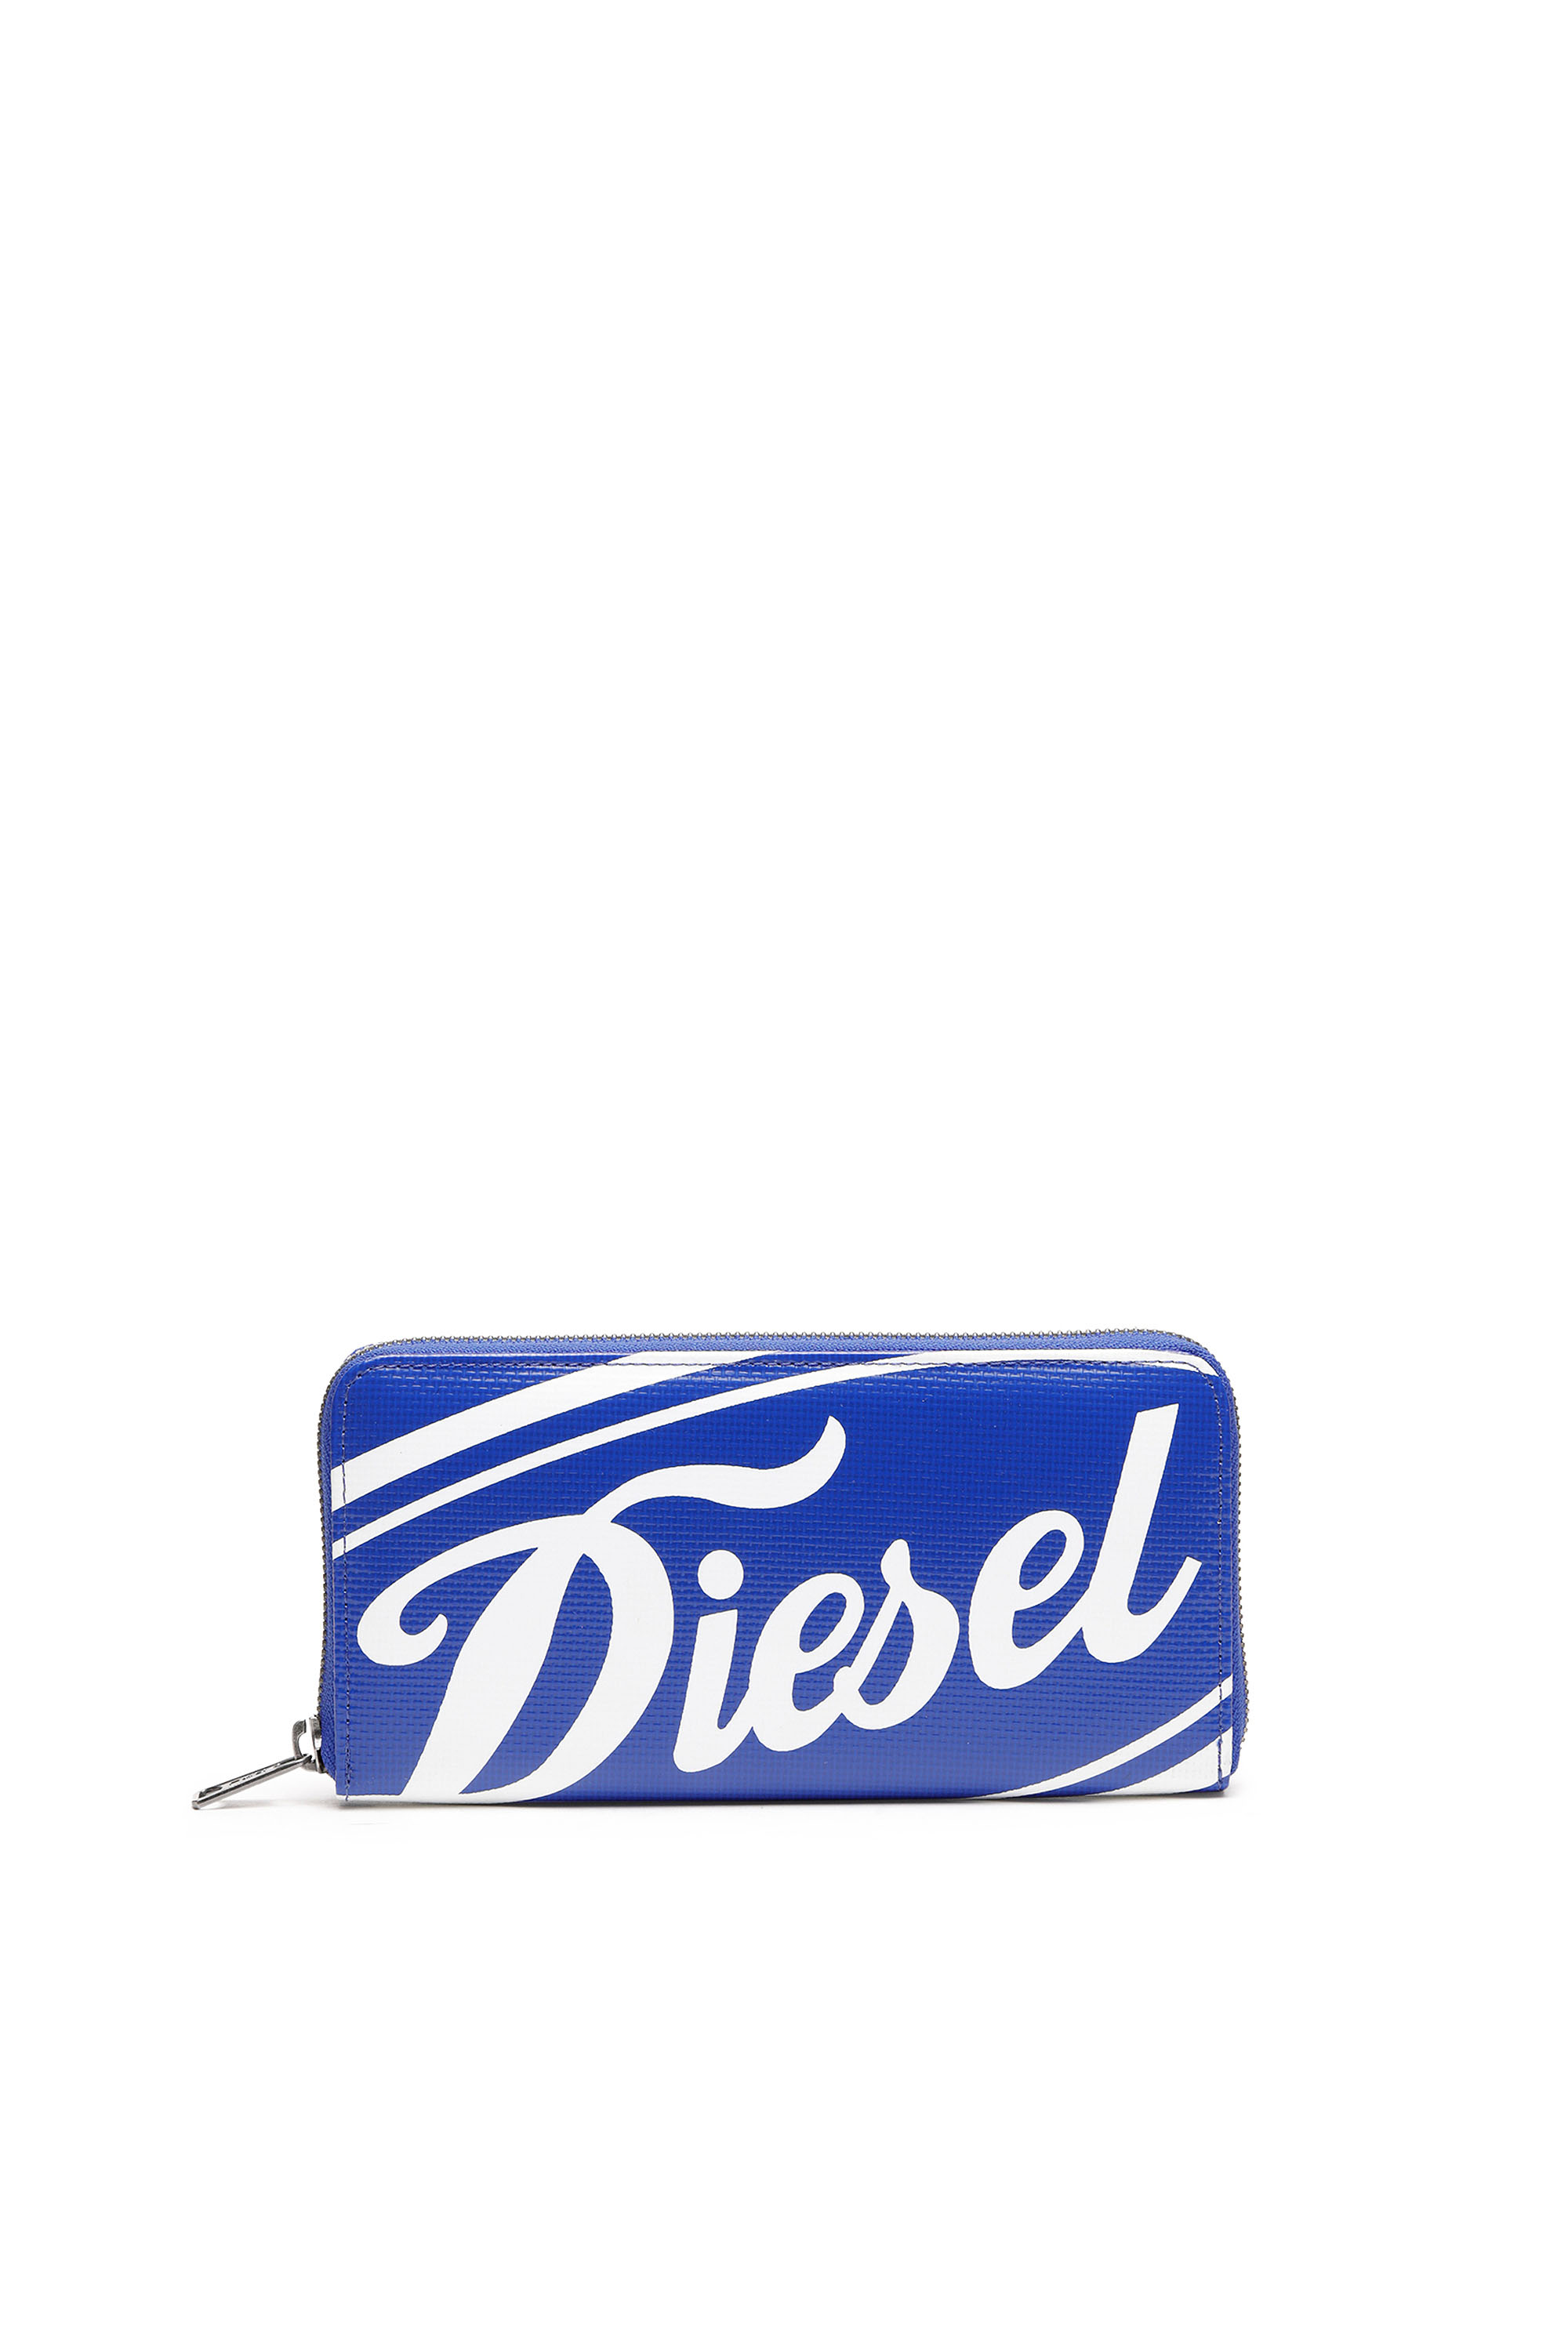 Diesel - 24 ZIP, Bleu/Blanc - Image 1